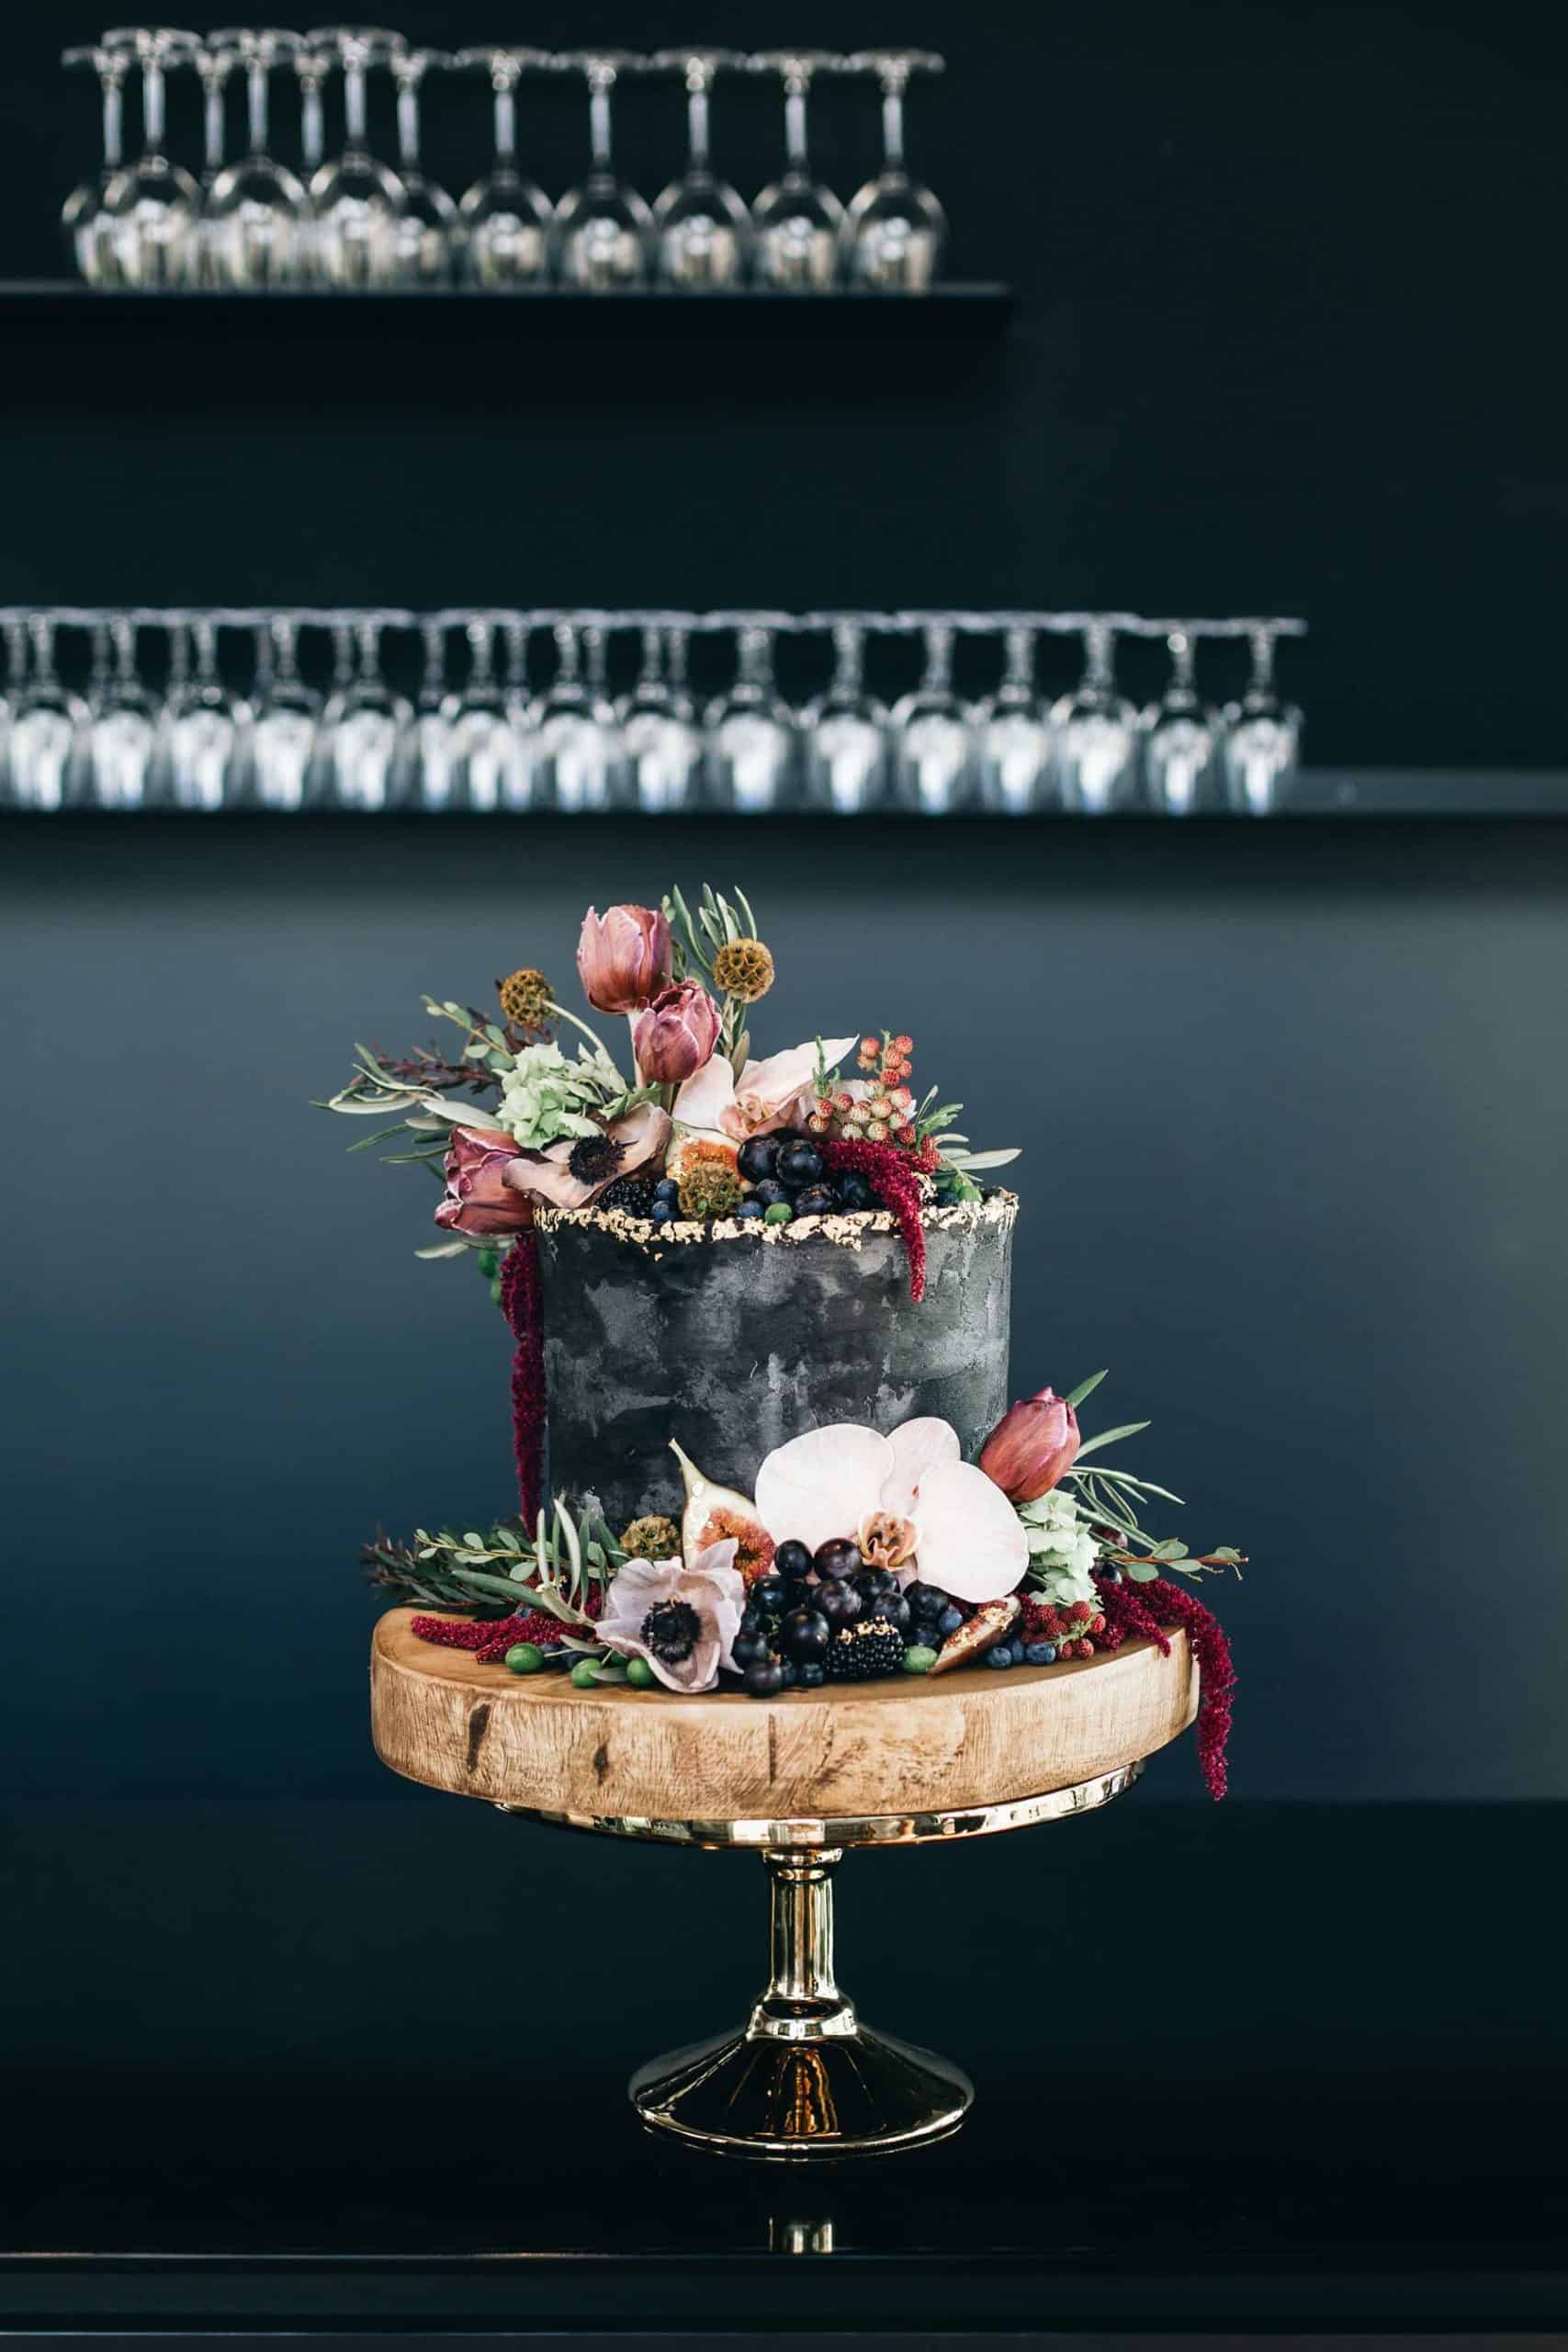 best wedding cakes of 2019 - black cake with fresh flowers